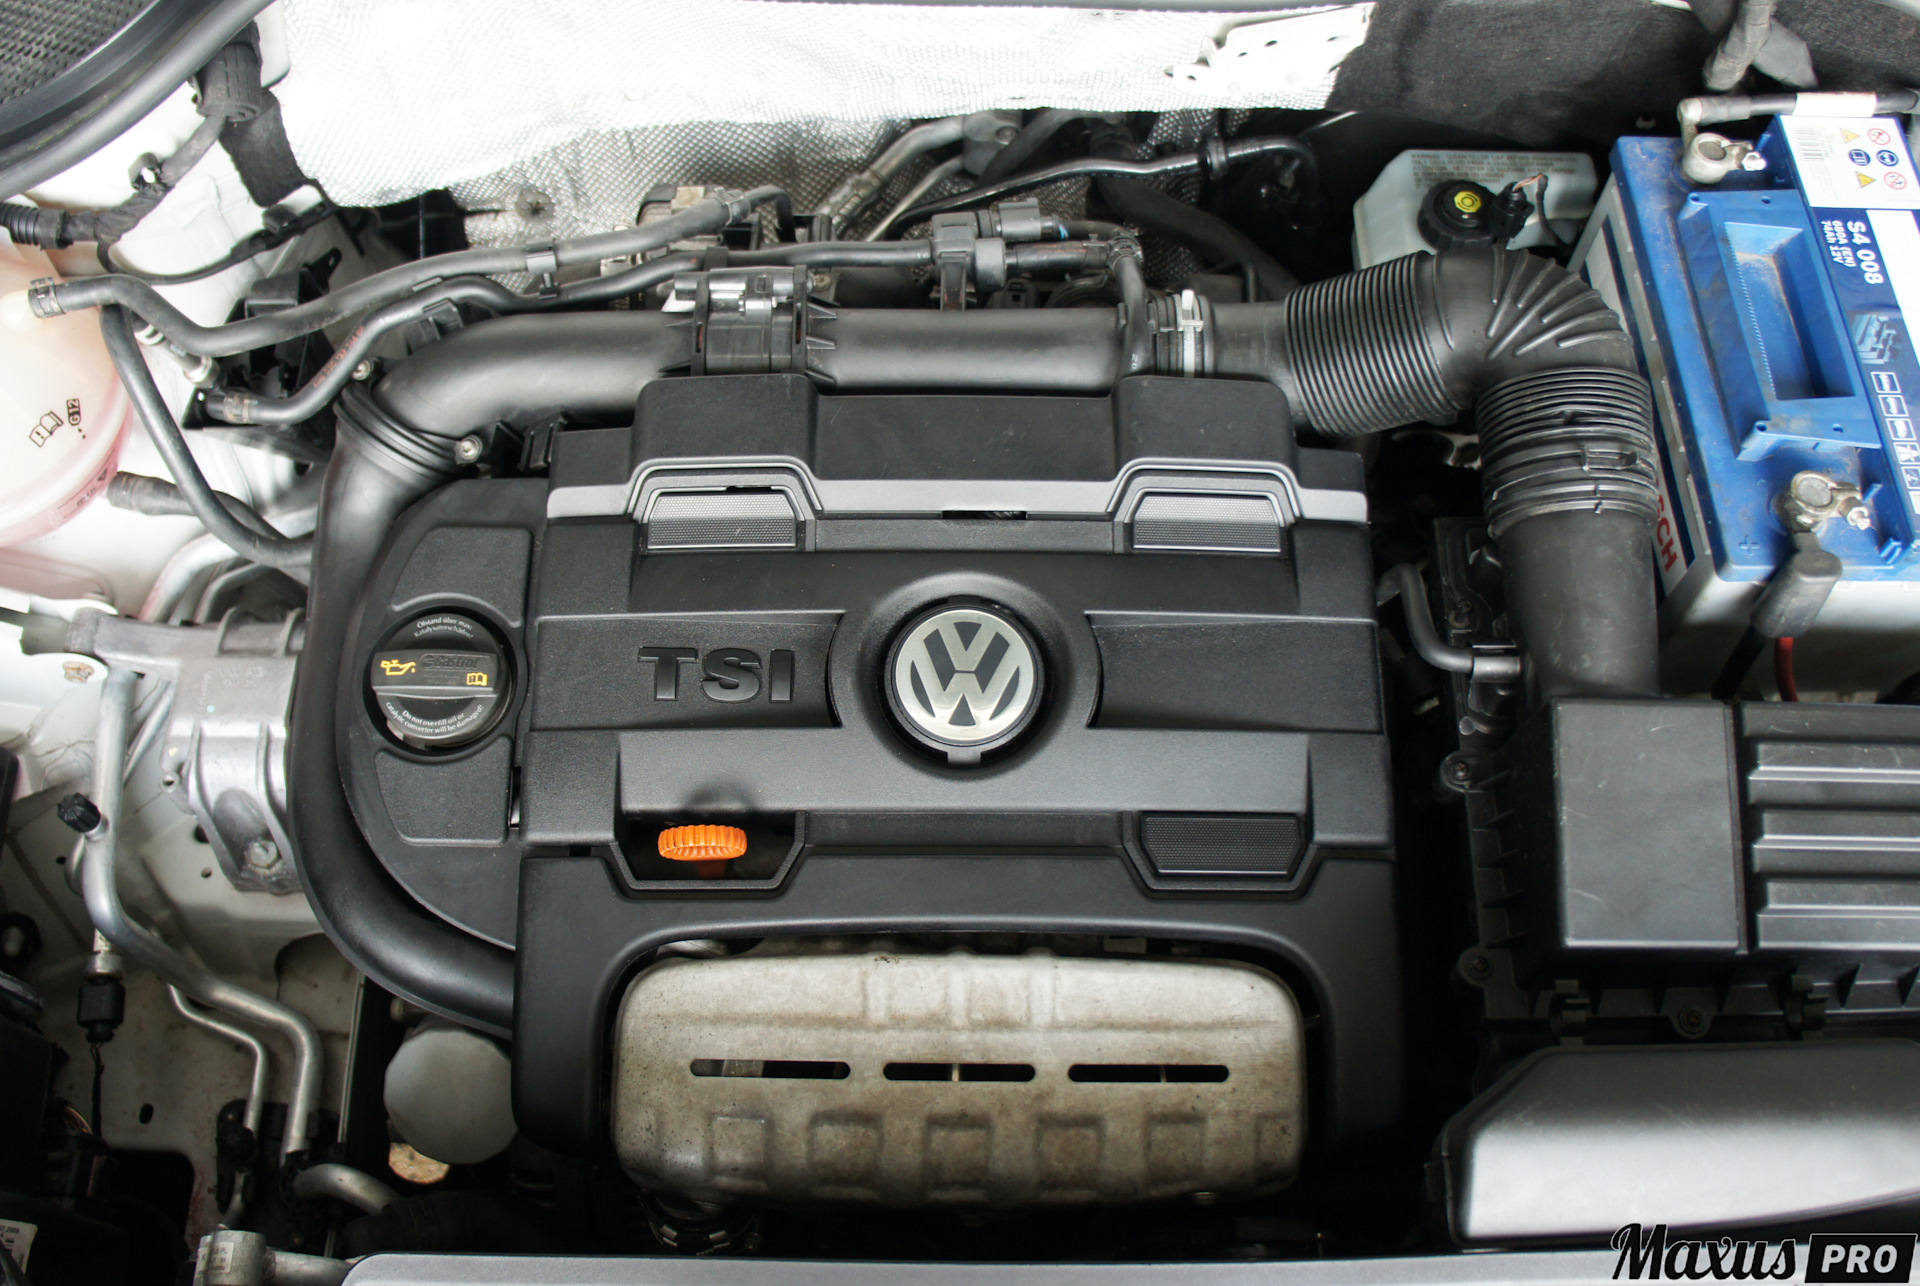 1.4 cava. Двигатель Фольксваген 1.4 TSI. Volkswagen 1.4 TSI 150 Л.С. Двигатель Volkswagen Tiguan 1.4 TSI. 1.4 TSI ea111.